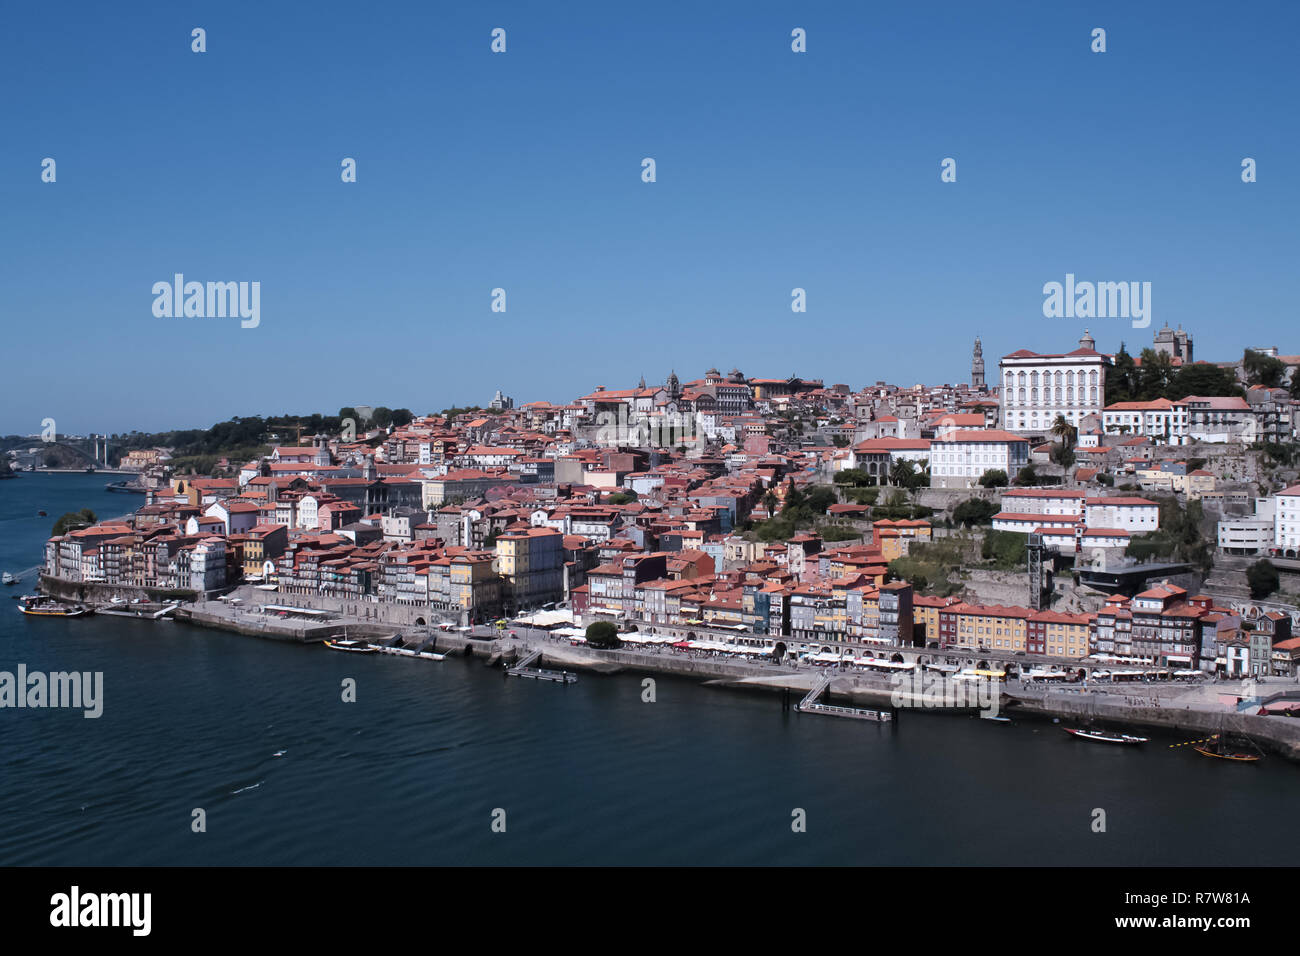 Landscape of the city of Porto along the river Stock Photo